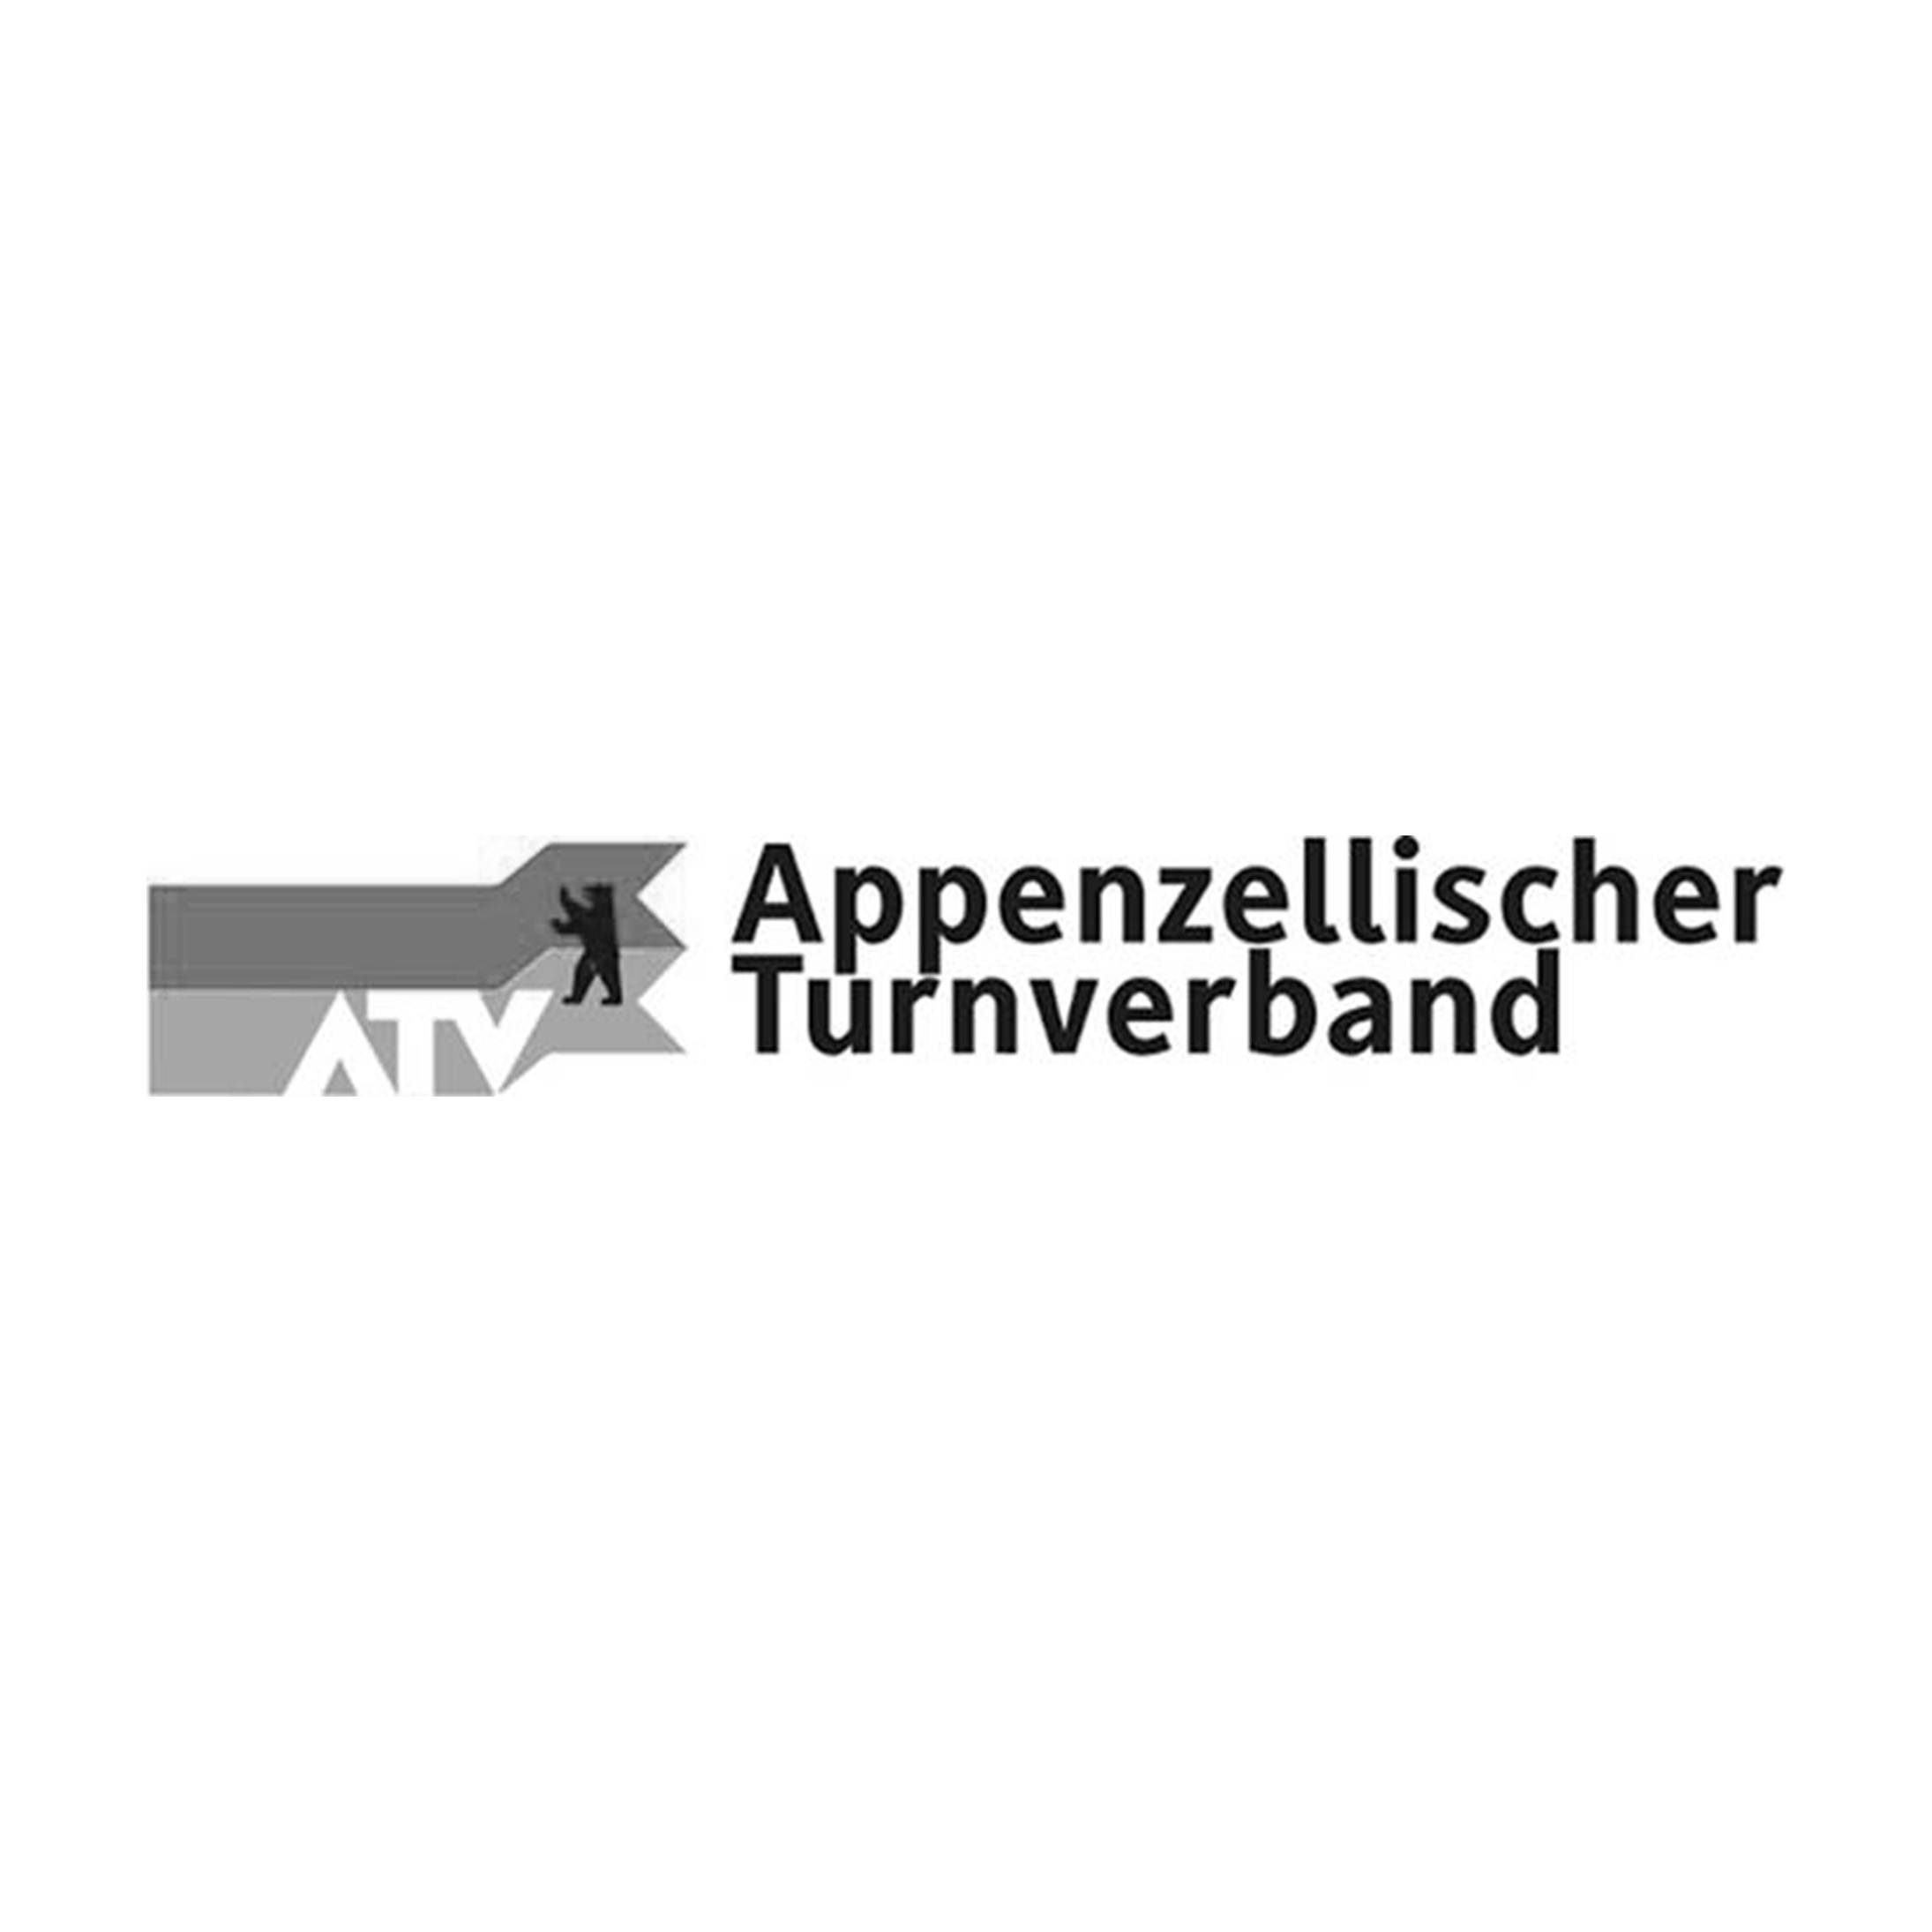 ASC_Logo_Kunden_AppenzTurnverband